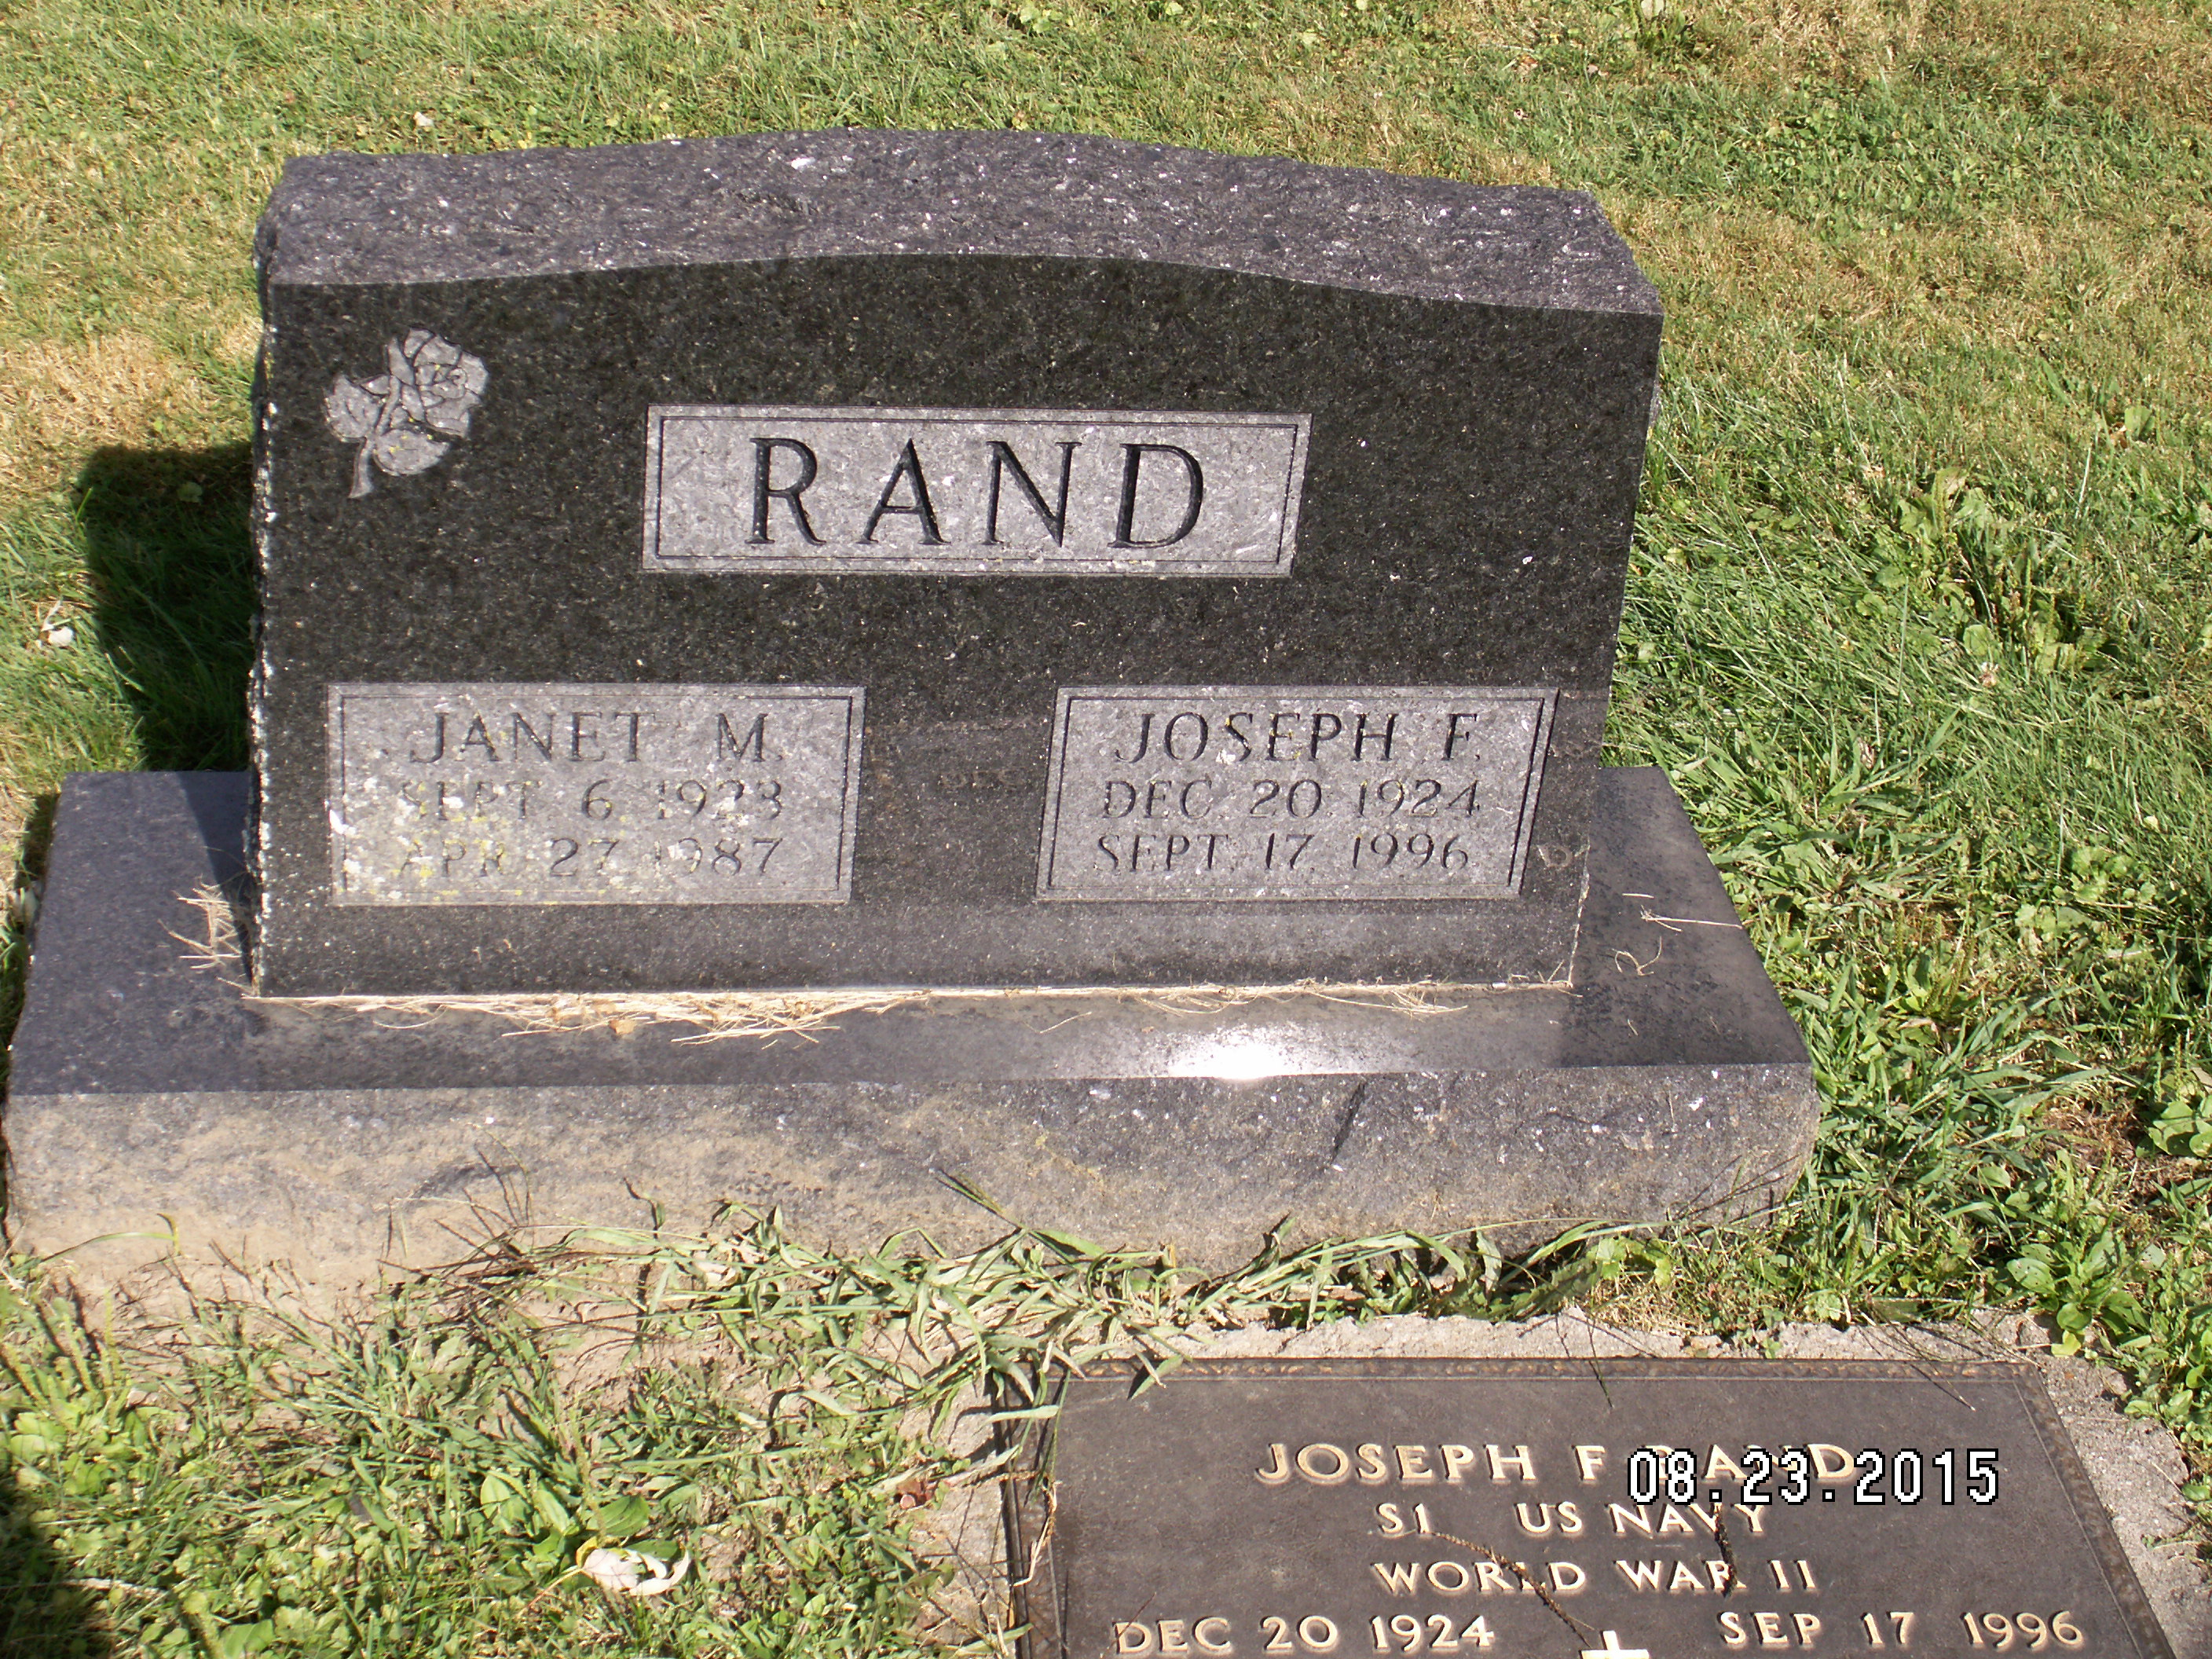 Janet and Joseph Rand Gravesite